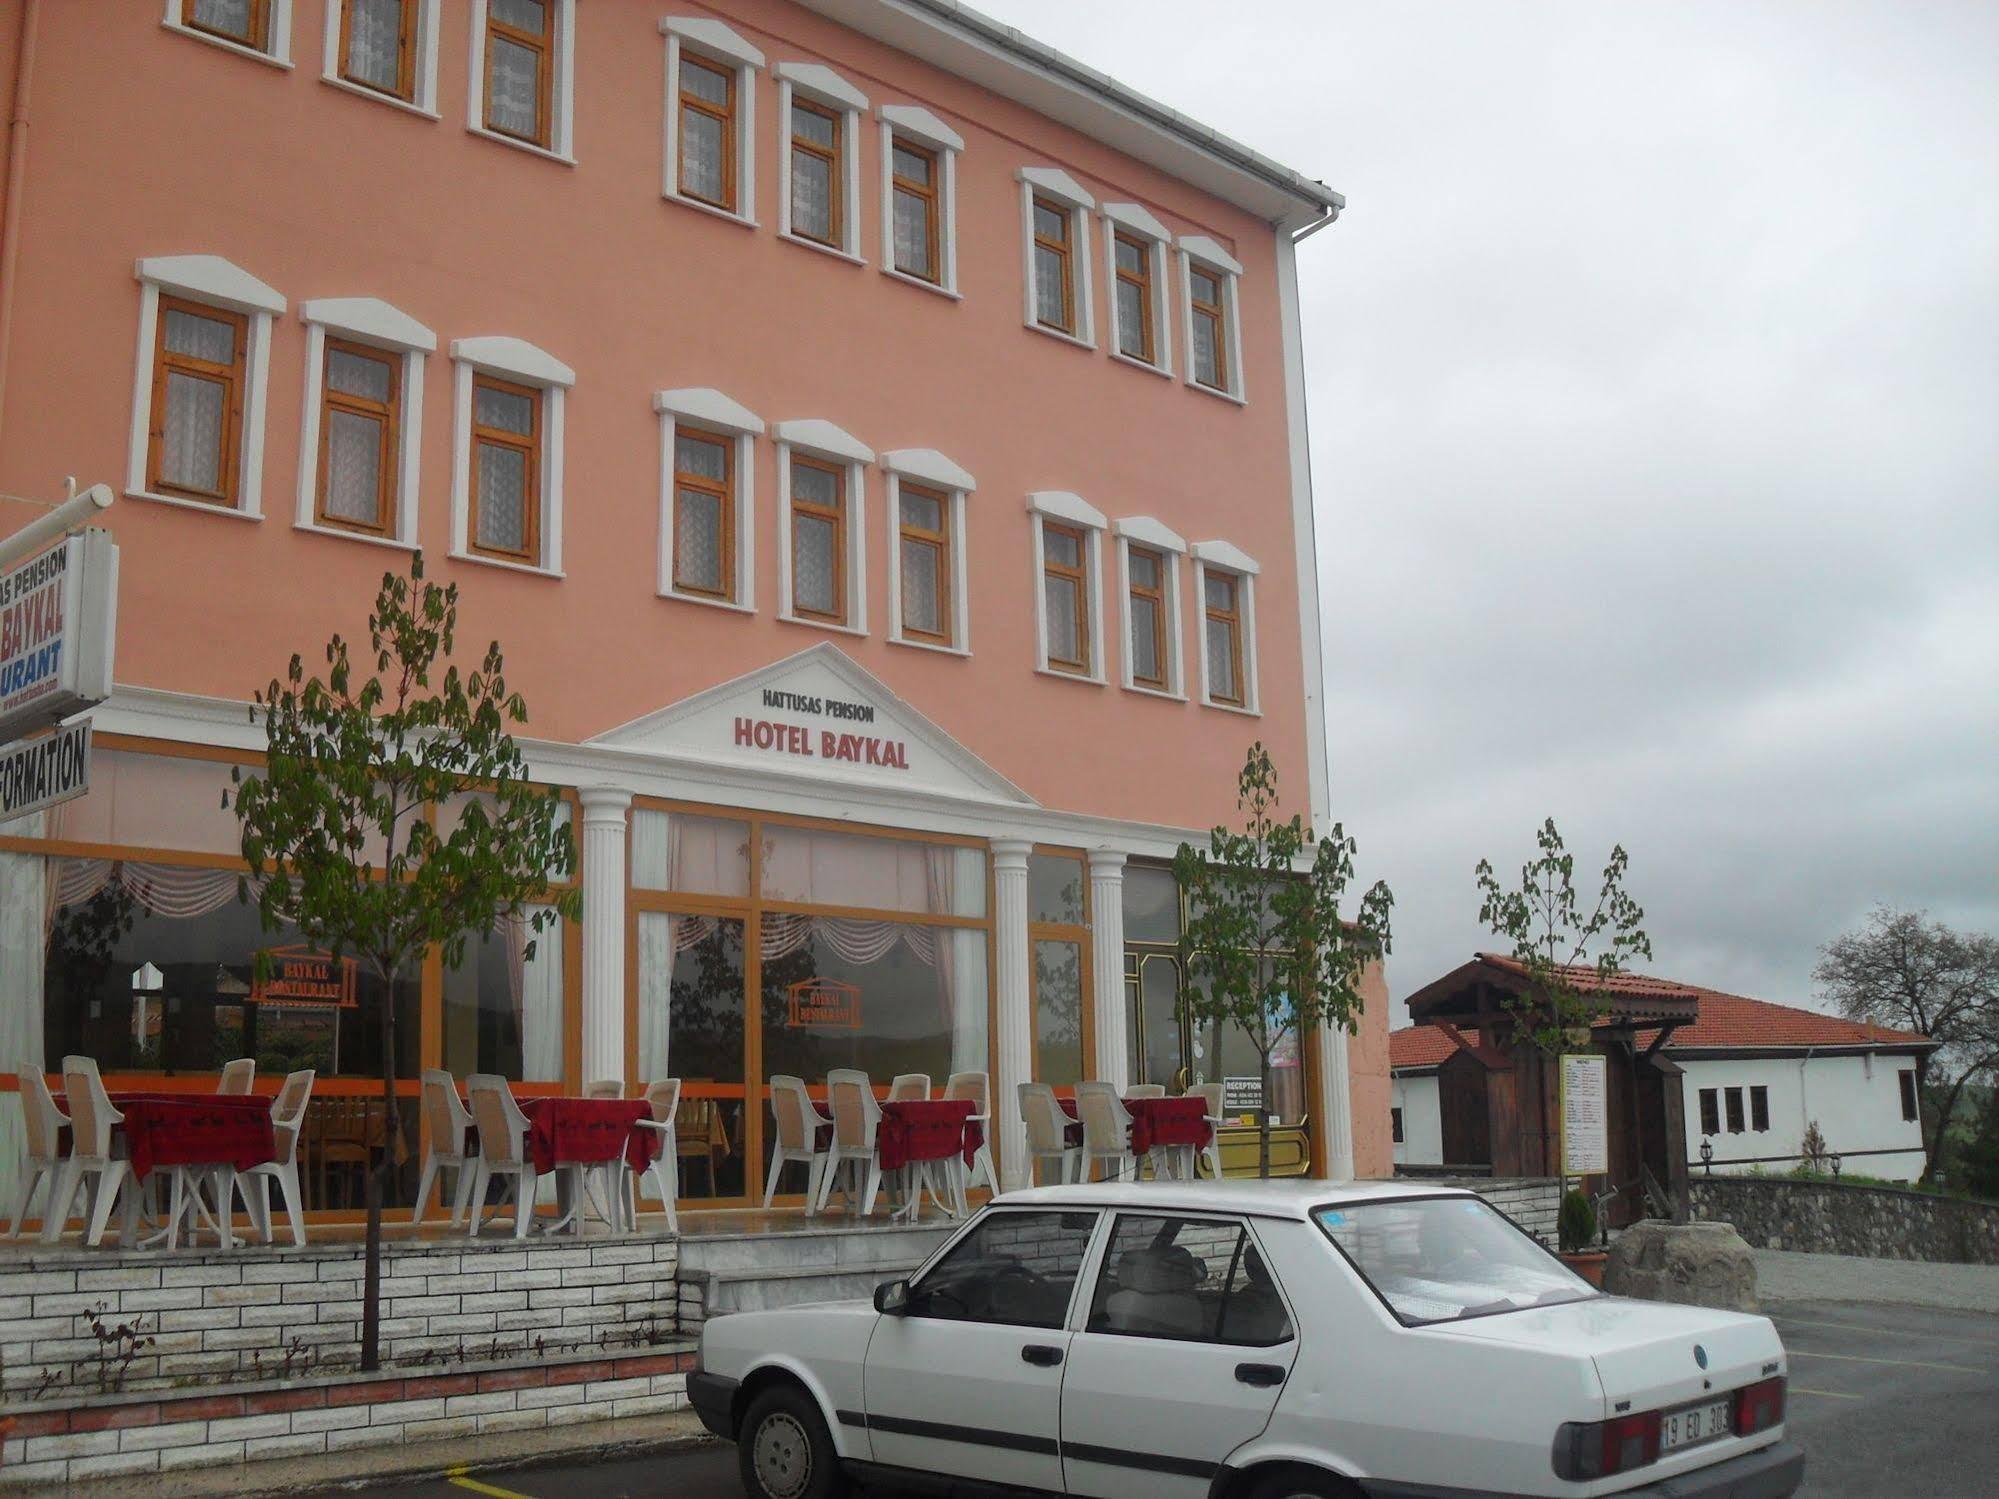 Hotel Baykal